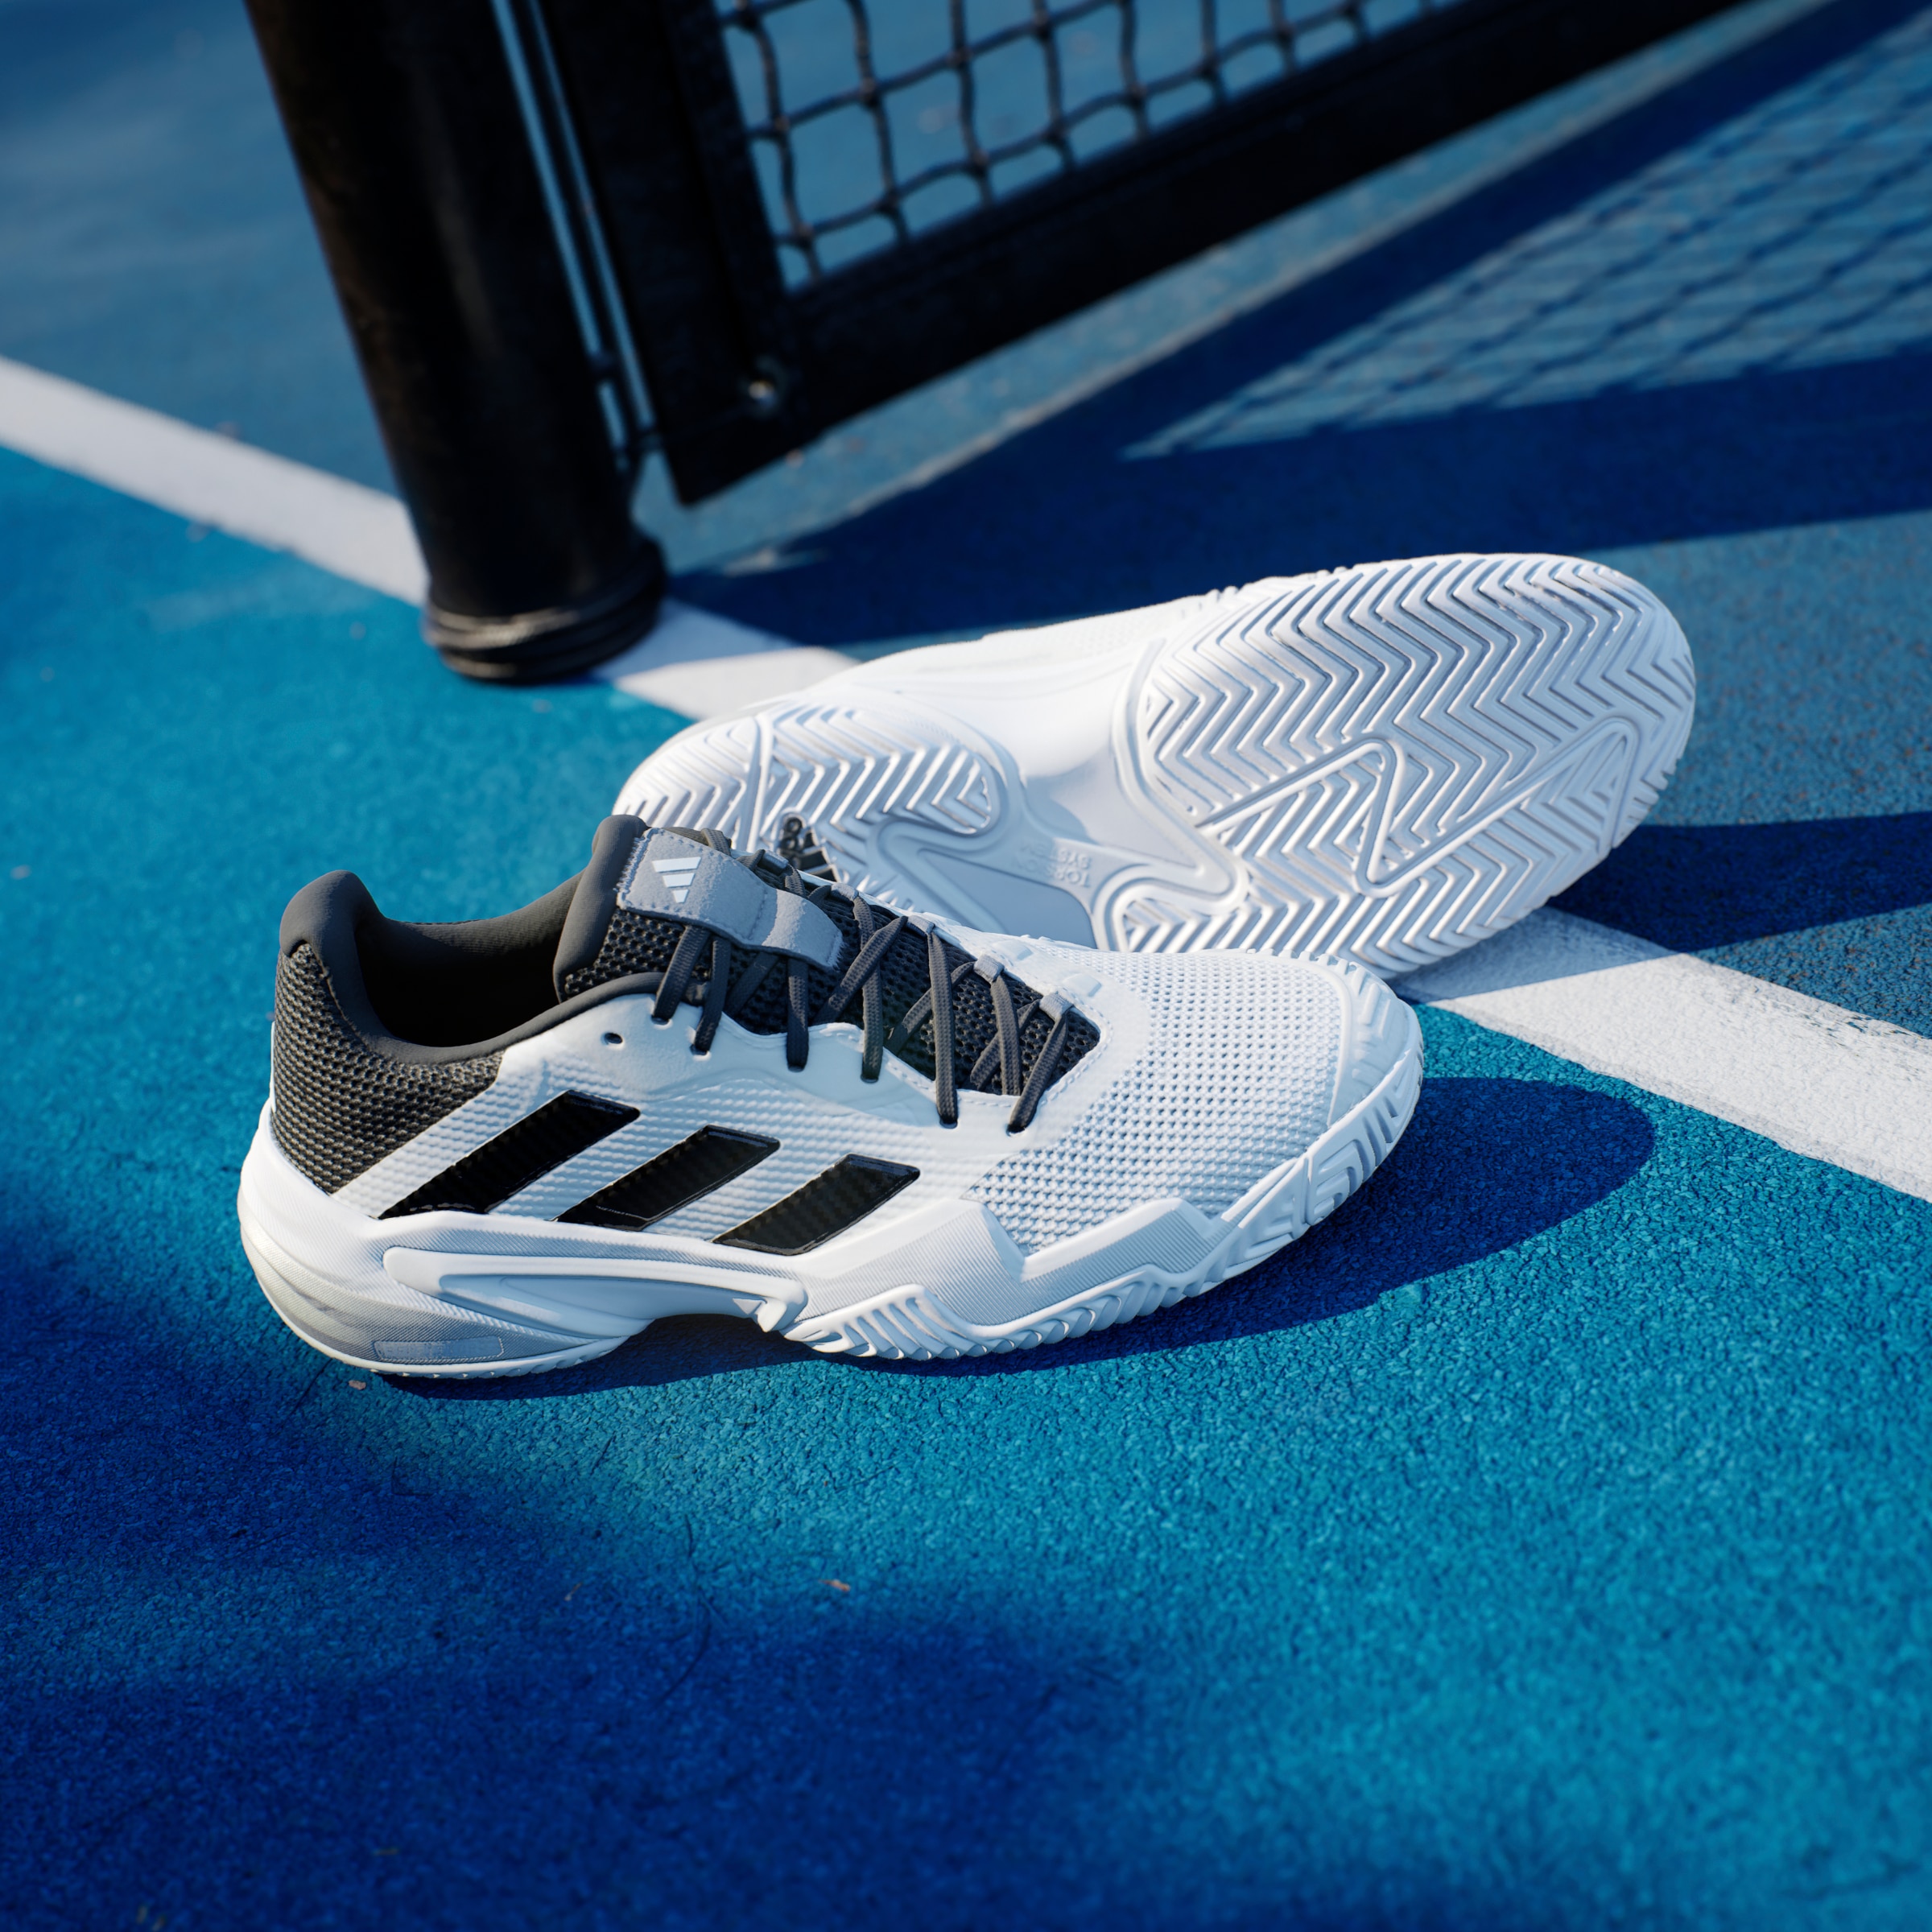 adidas Performance Tennisschuh »BARRICADE 13«, Multicourt